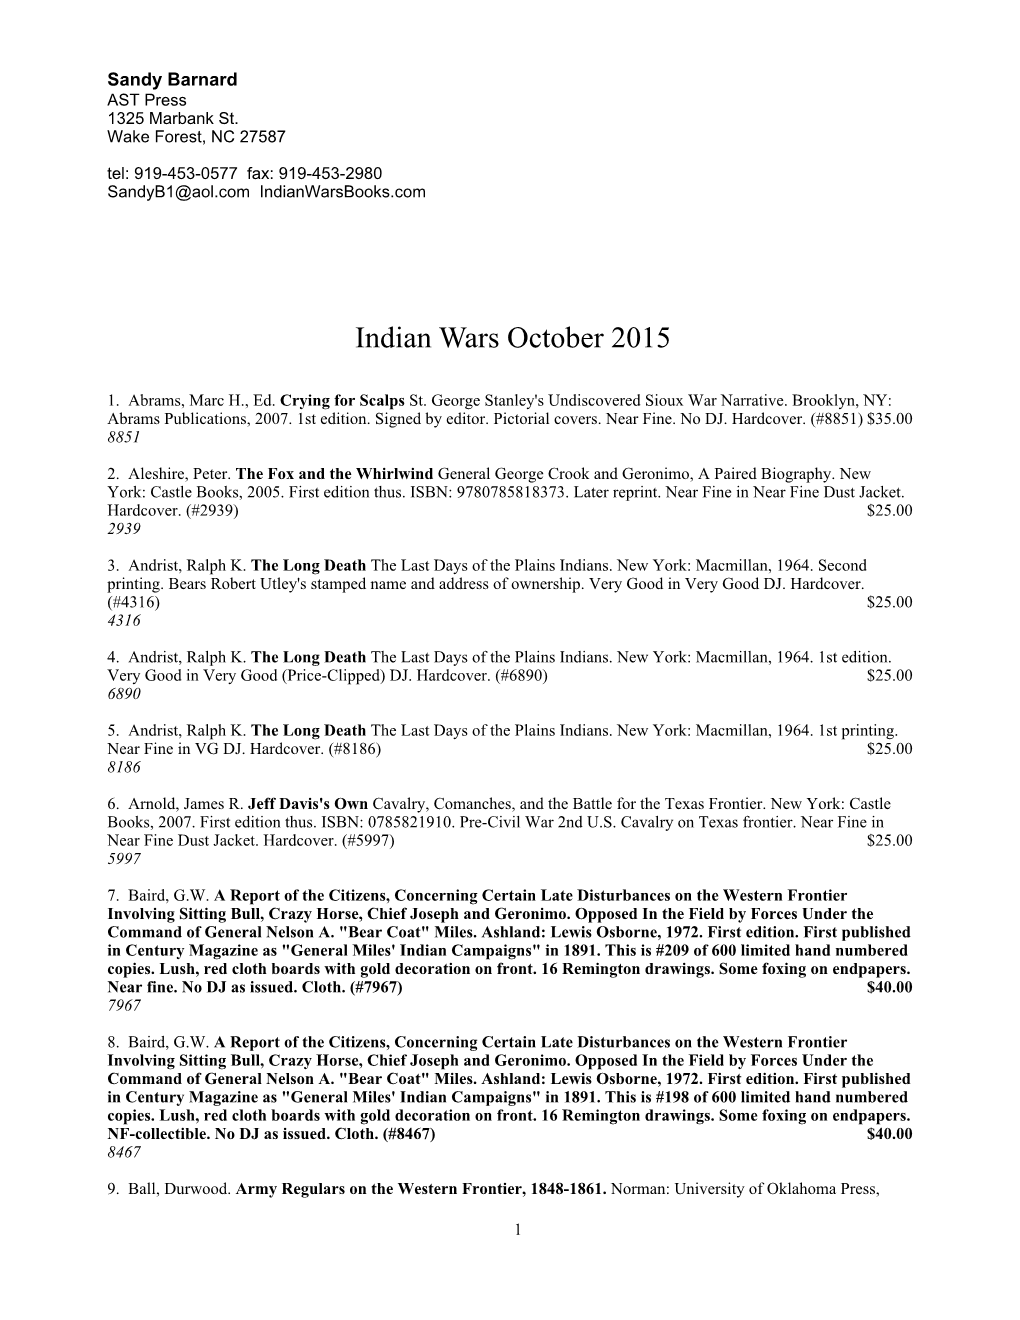 Indian Wars October 2015